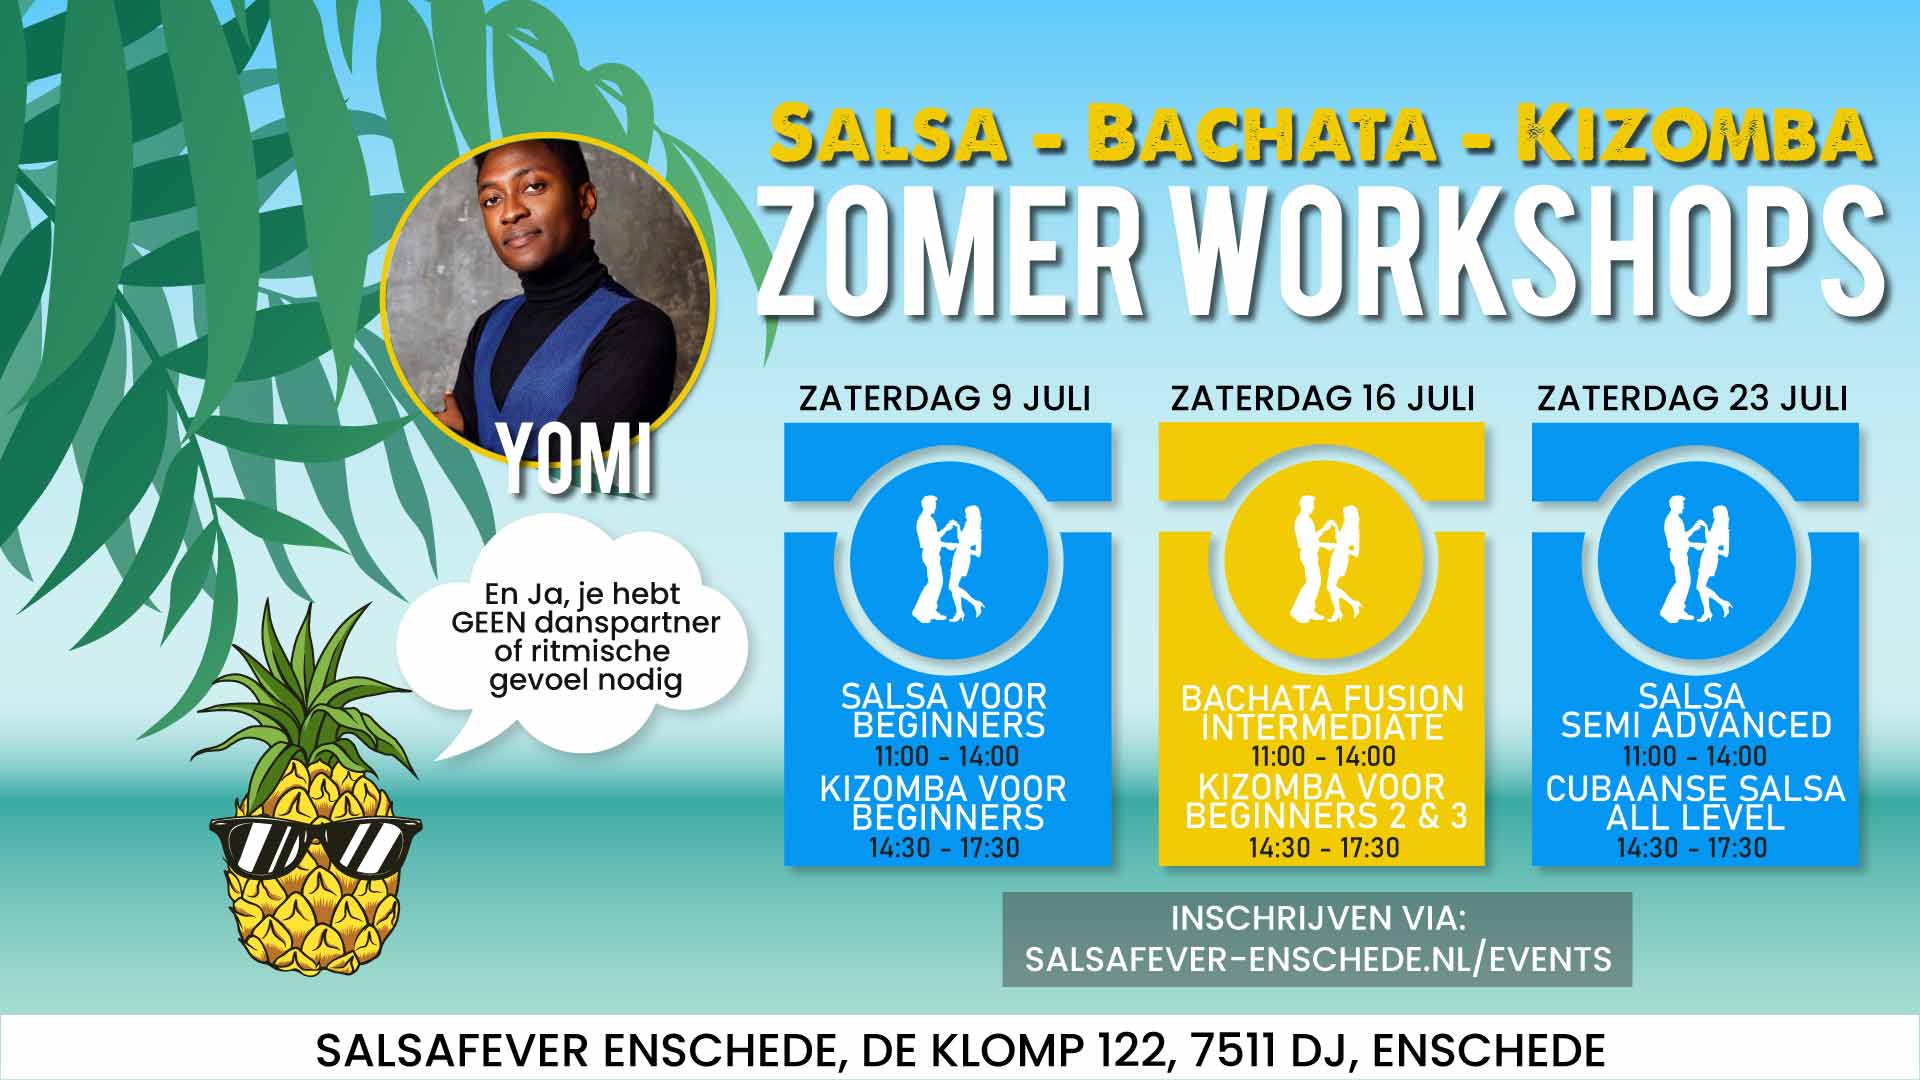 salsa enschede salsa leren dansen enschede bachata enschede zomer workshop enschede kizomba (2)